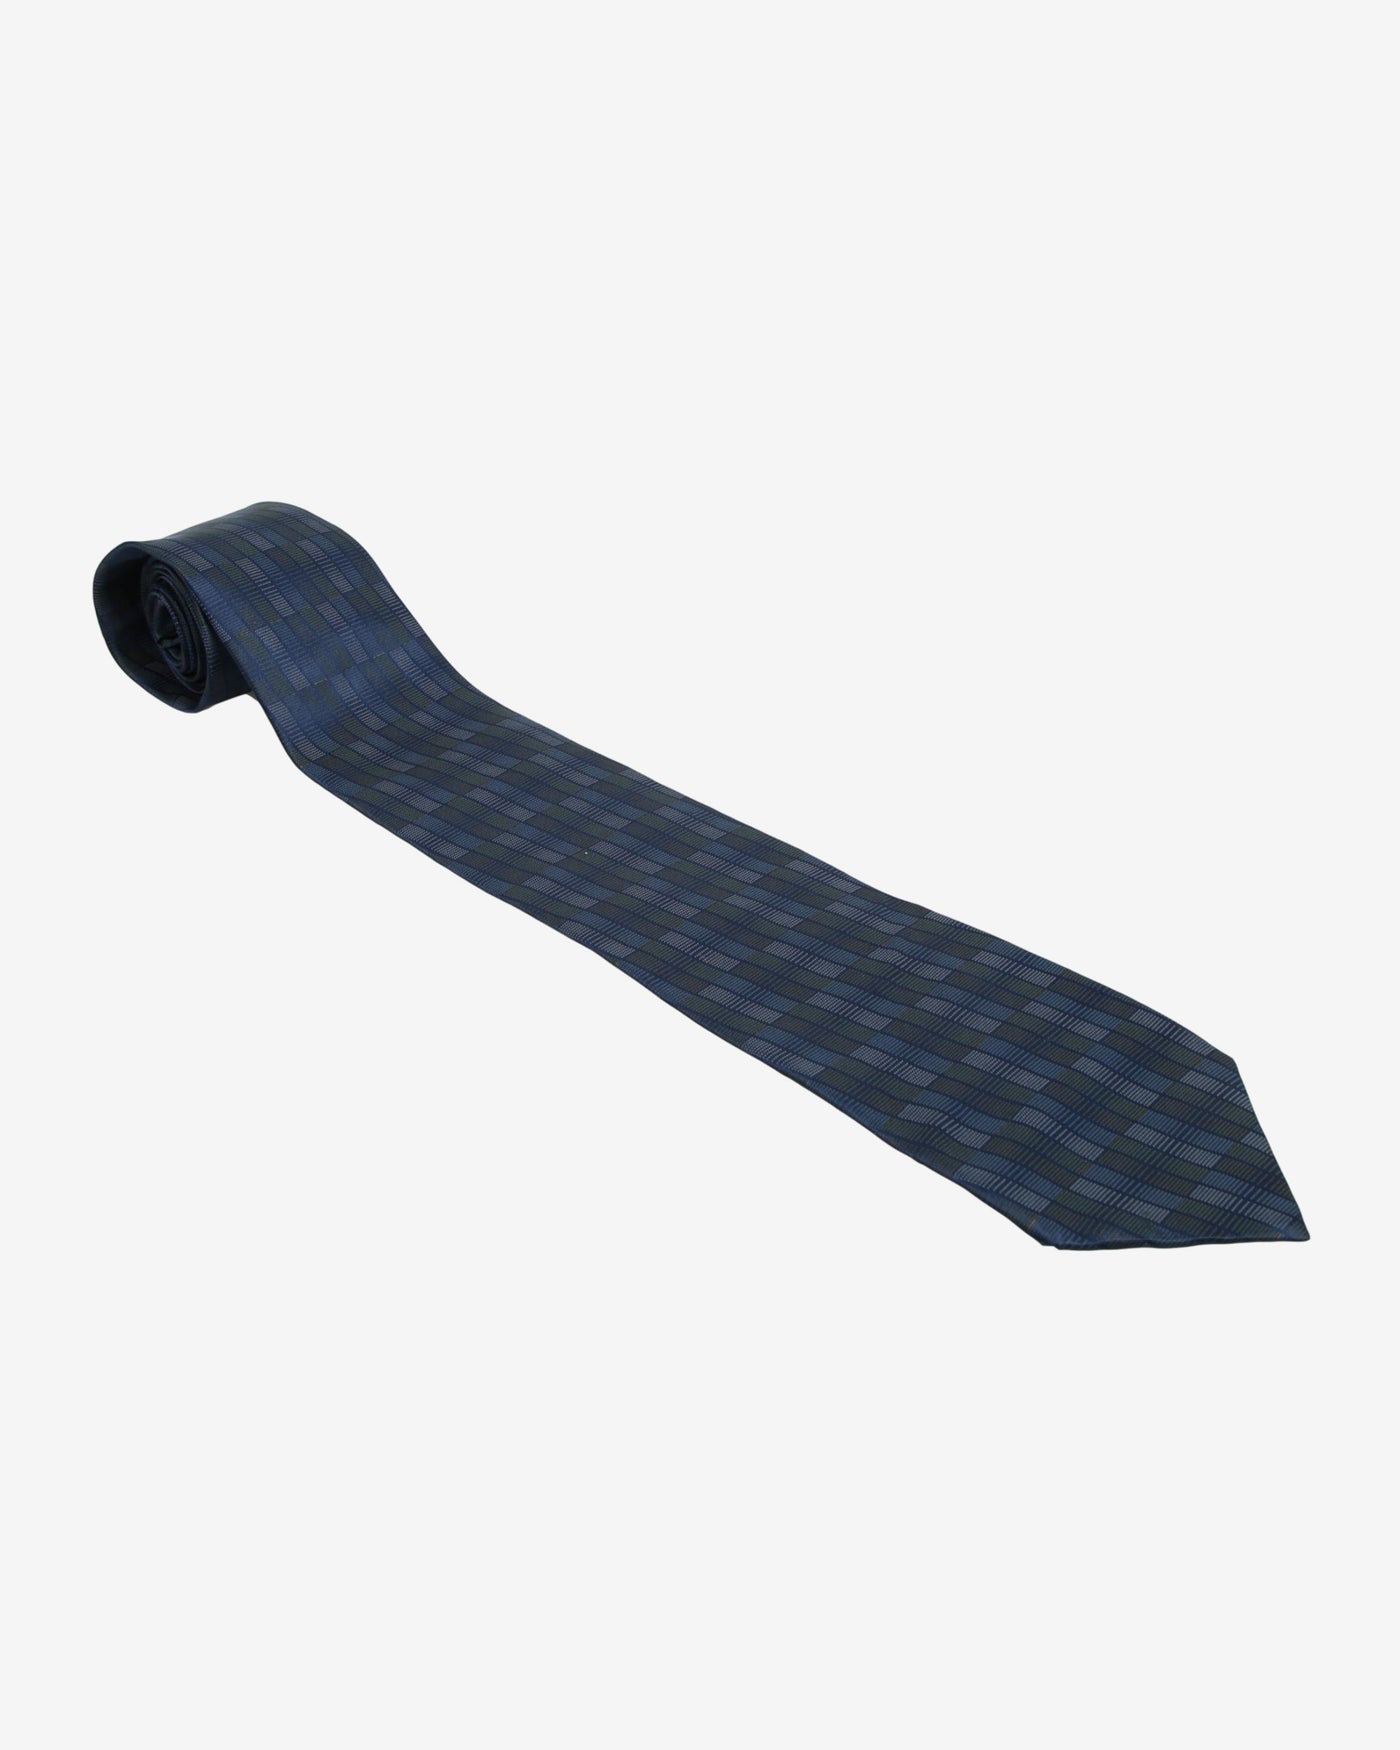 DKNY Blue / Navy Patterned Silk Tie